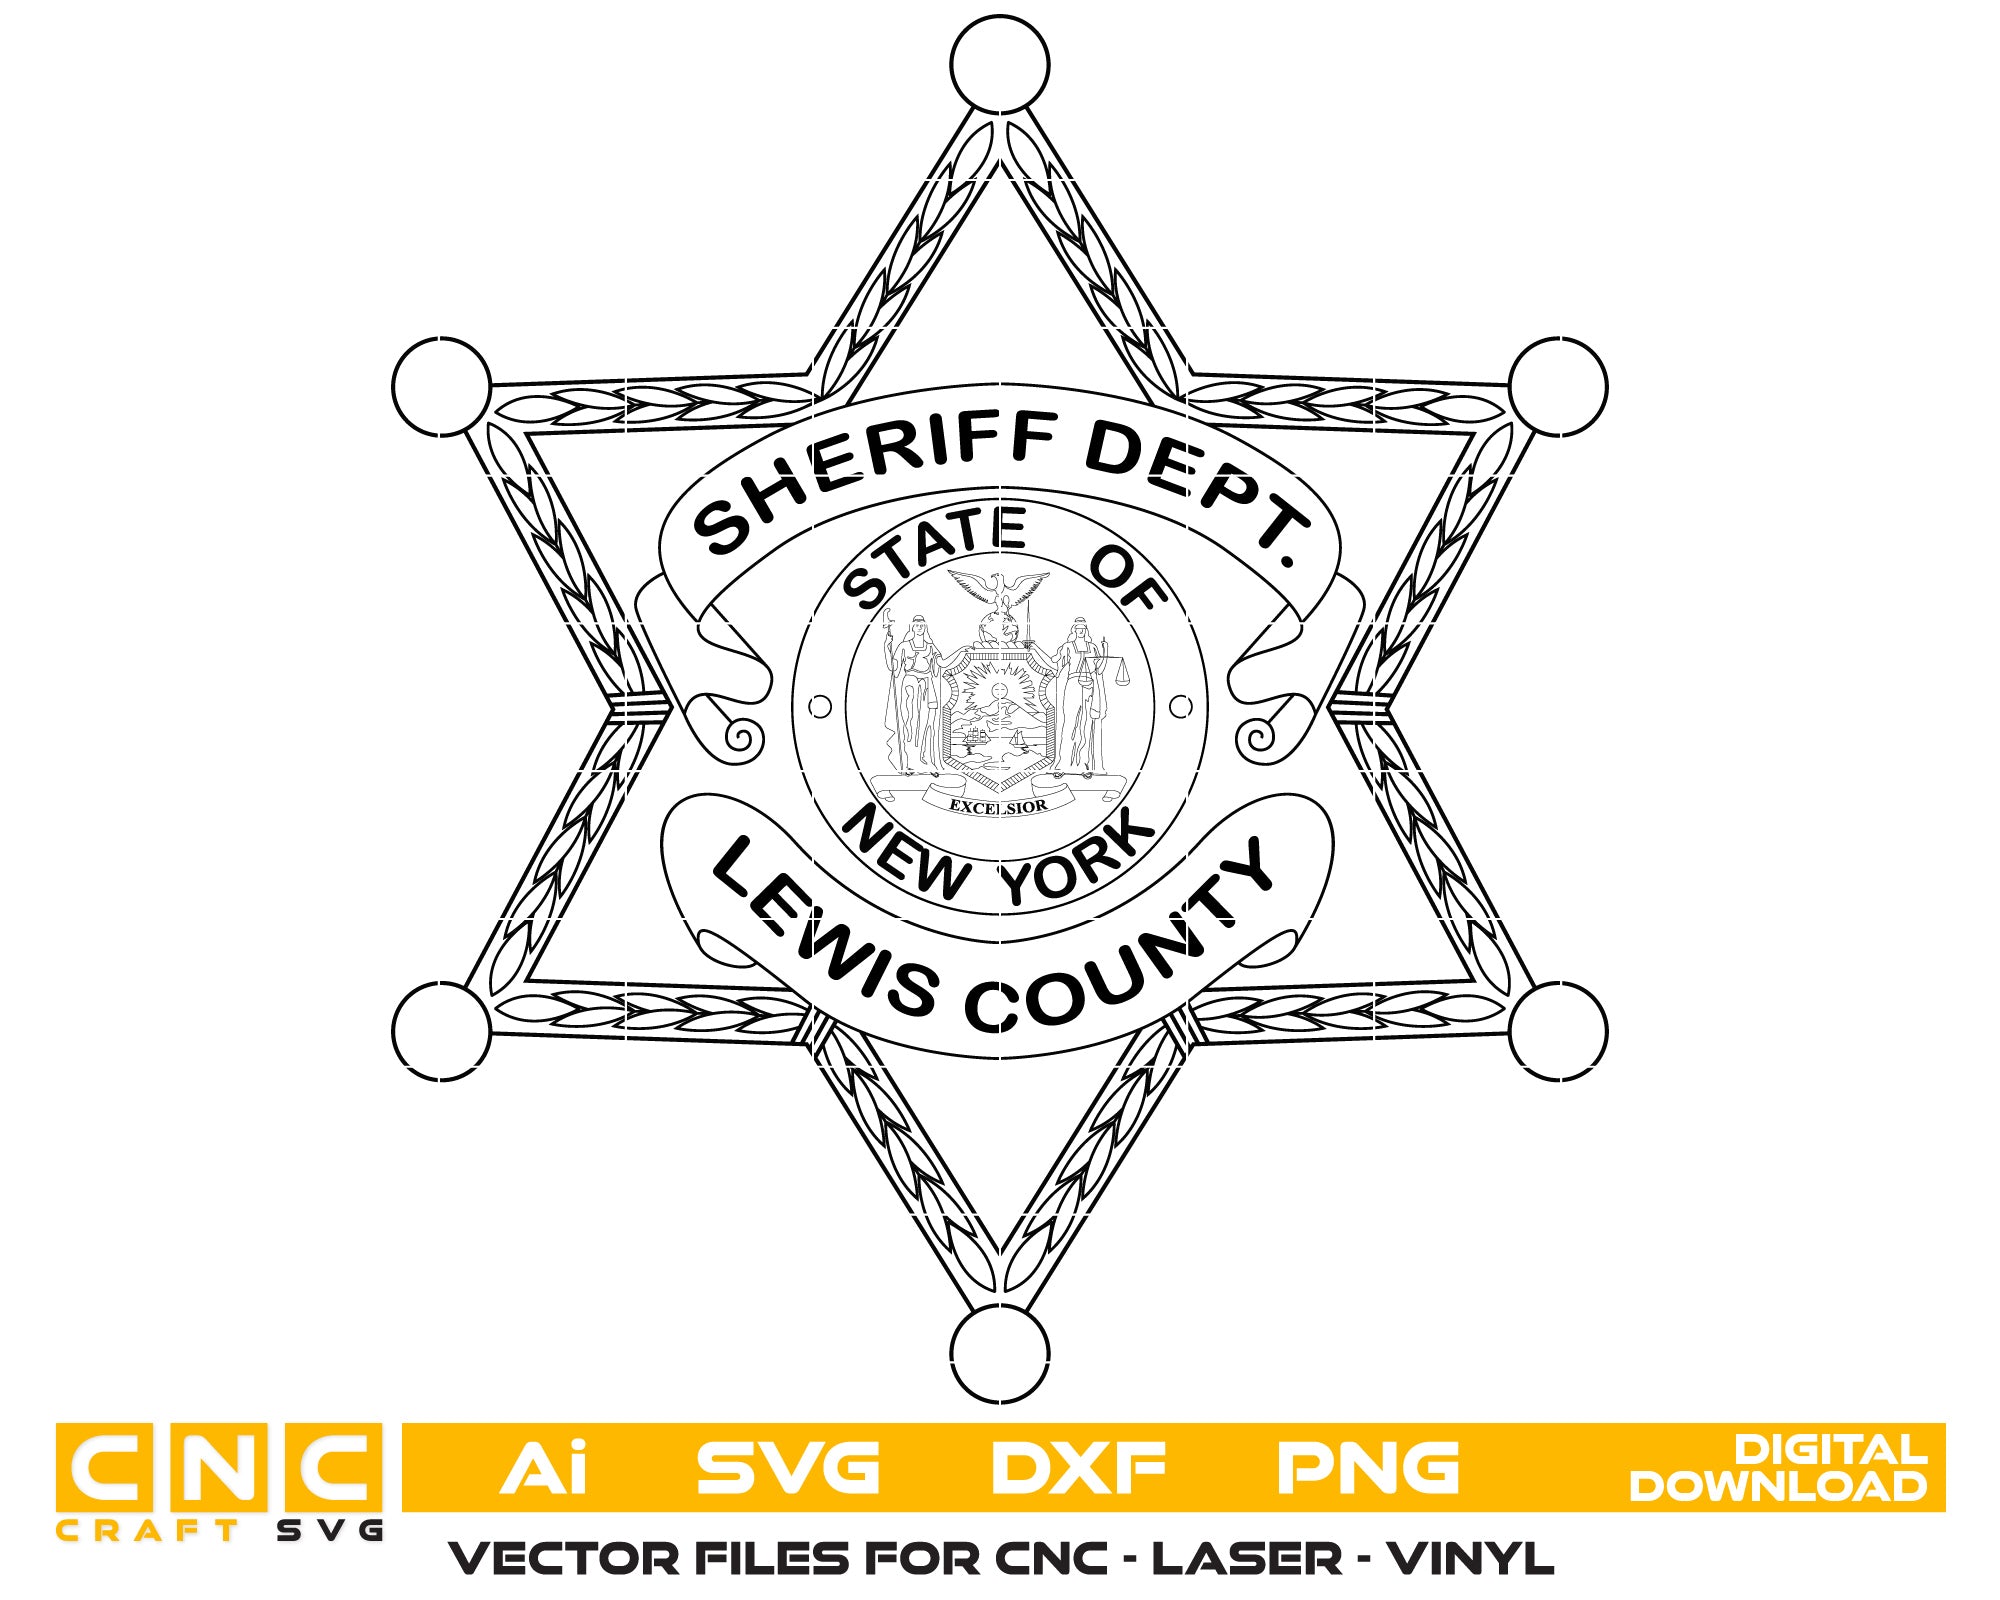 New York Lewis County Sheriff vector art